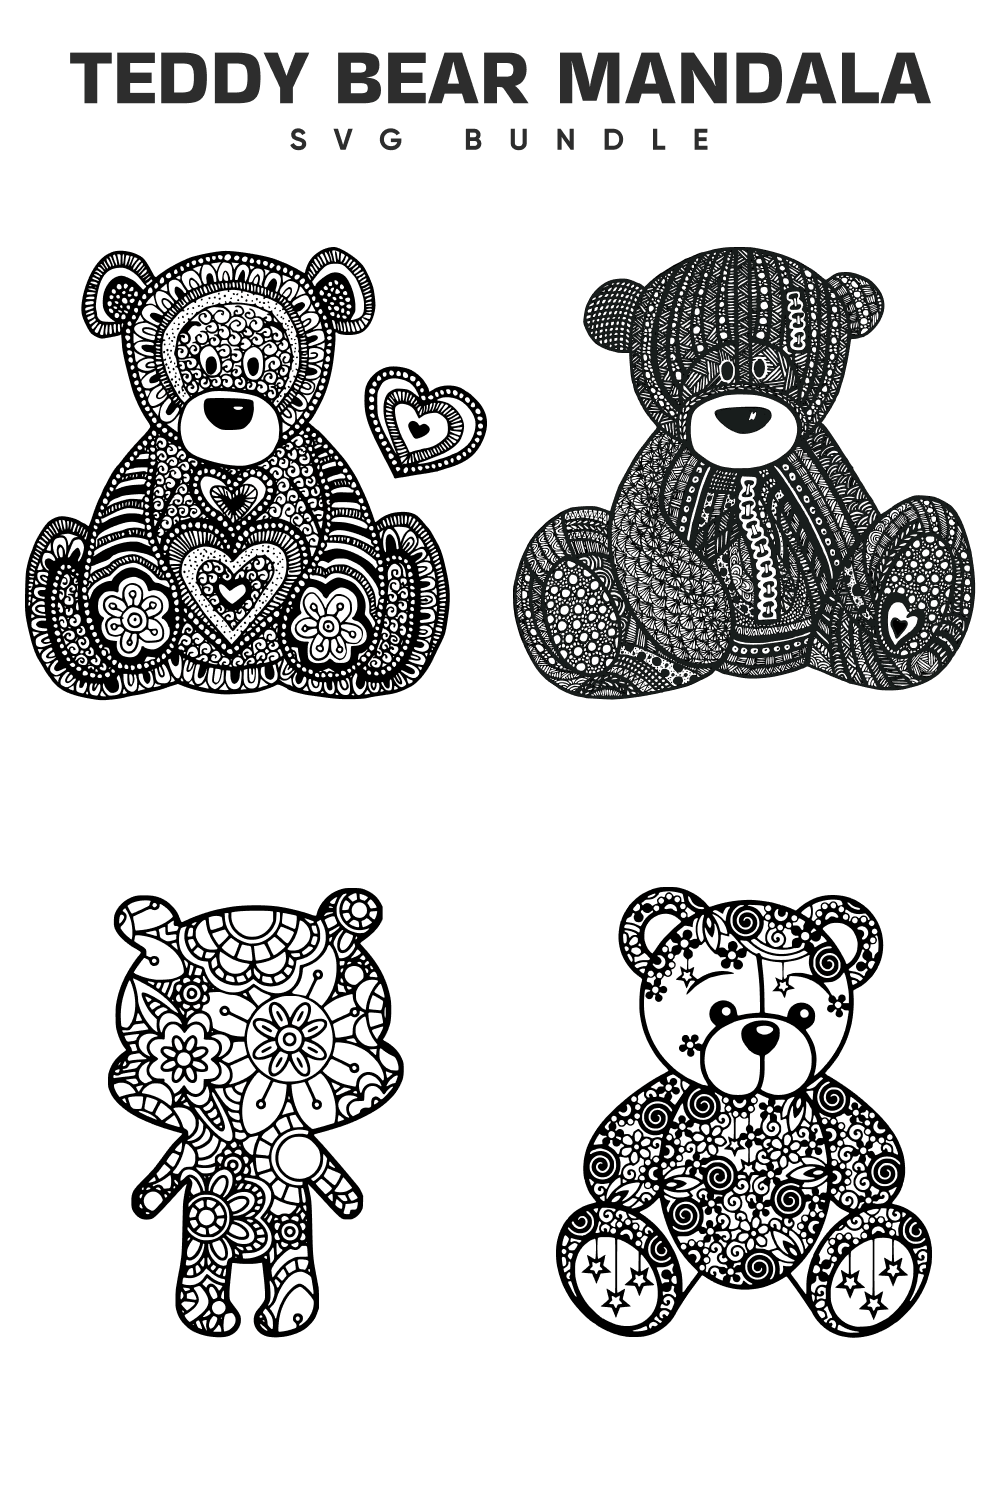 Teddy bear with a heart on its chest and a teddy bear with a heart.